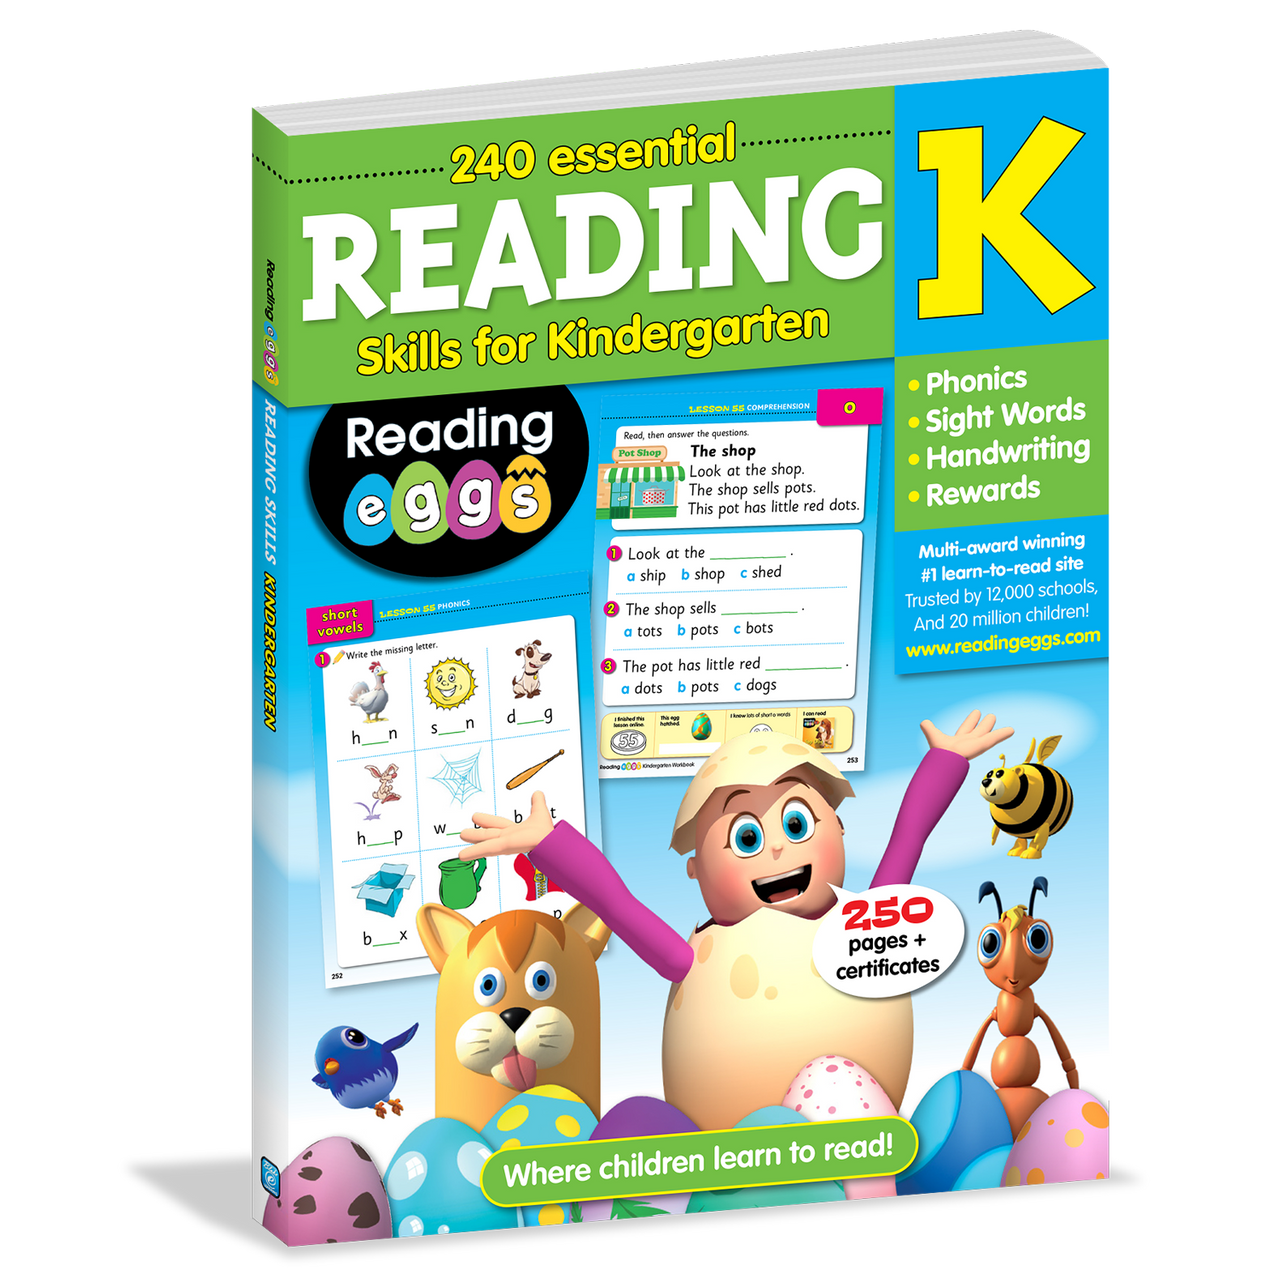 Reading　Shop　Kindergarten　US　Reading　Skills　240　for　Essential　Eggs